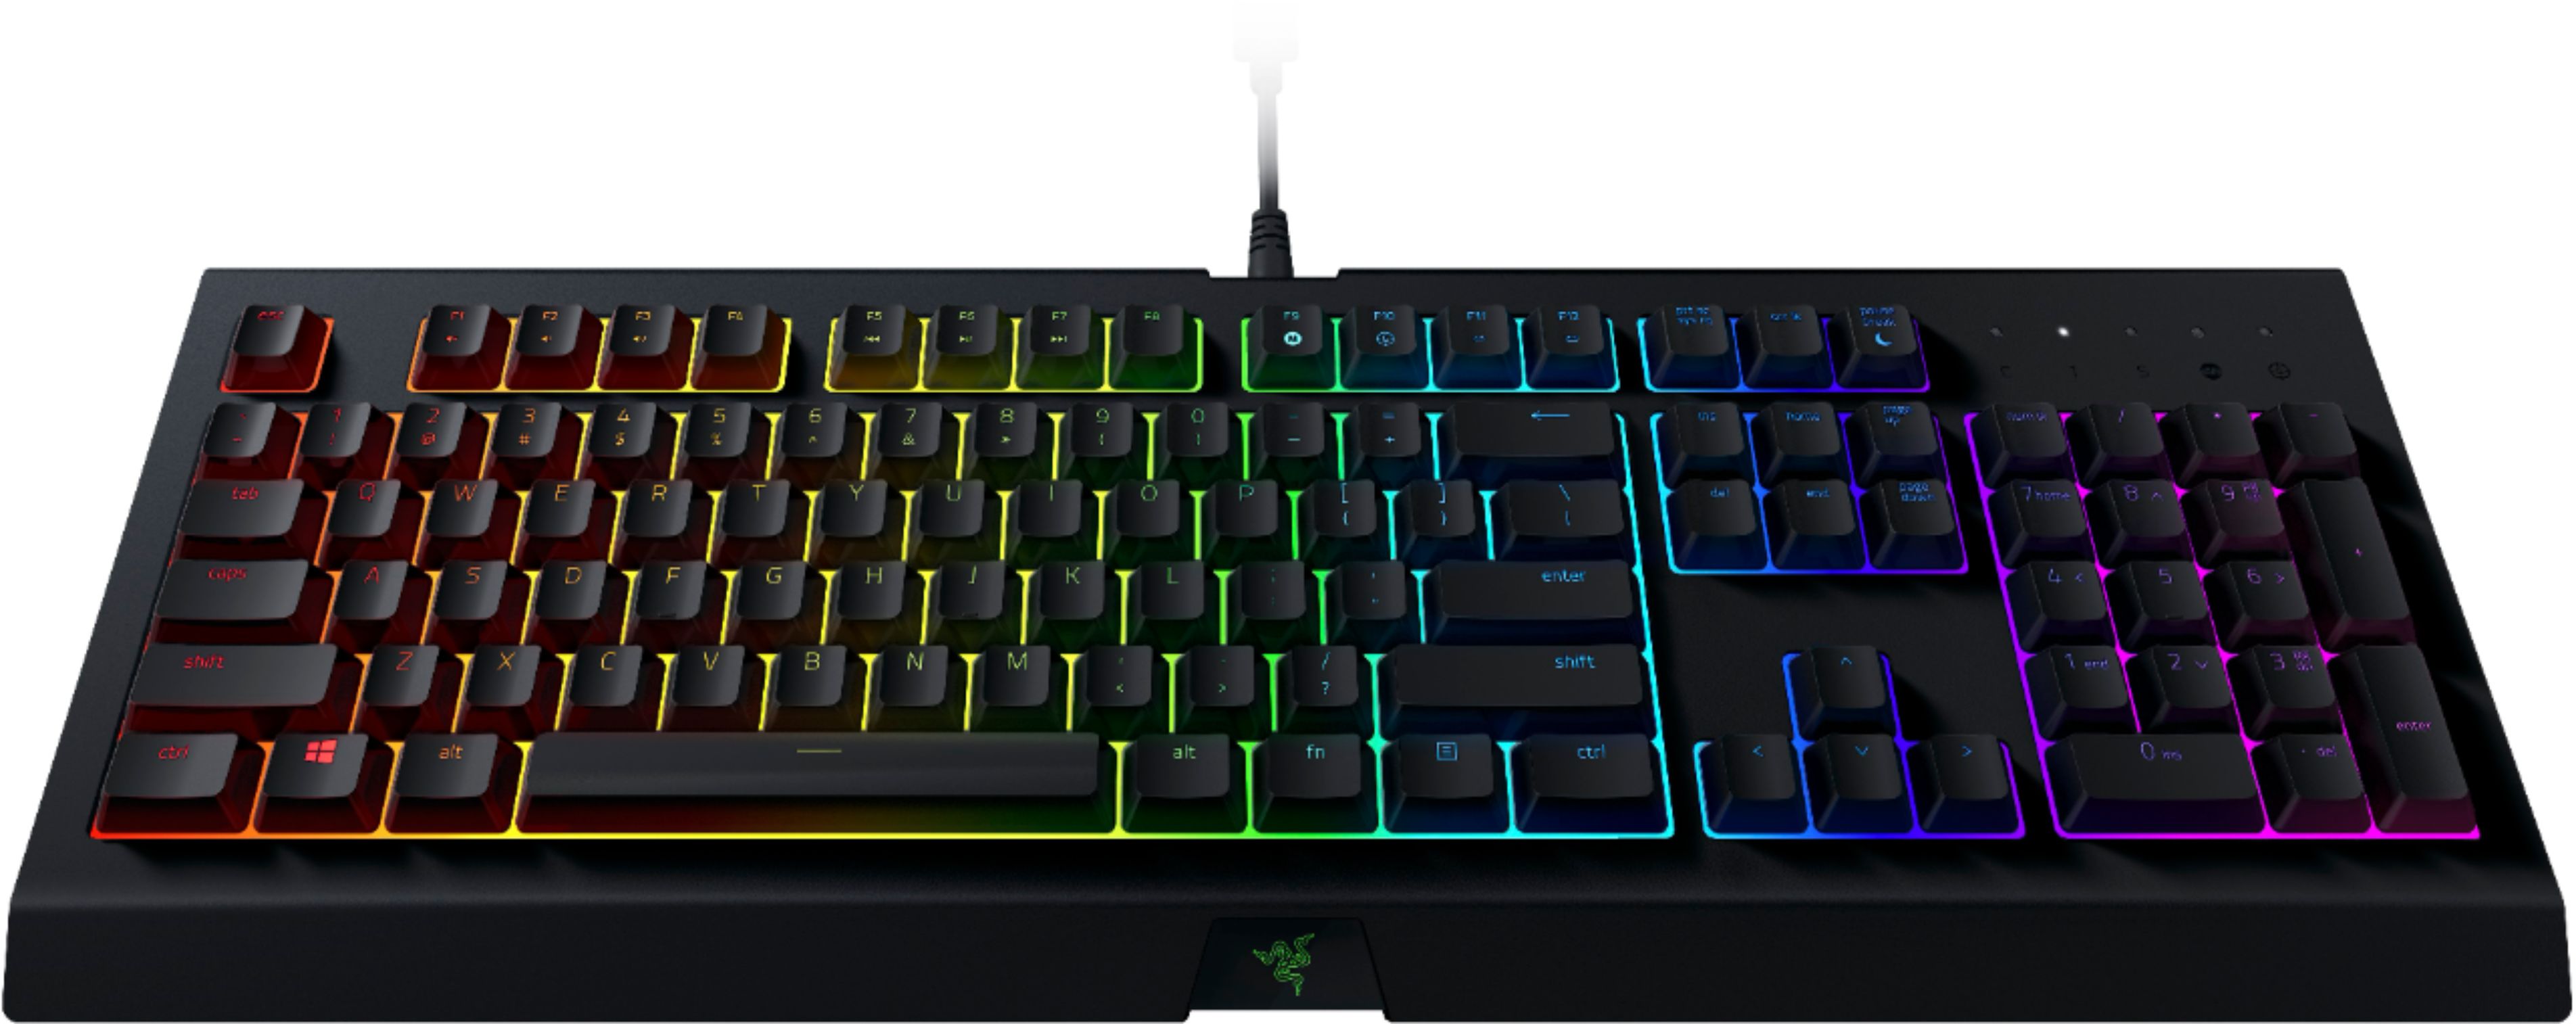 Razer Cynosa Chroma RGB Gaming keyboard Spill-Resistant Durable Design 